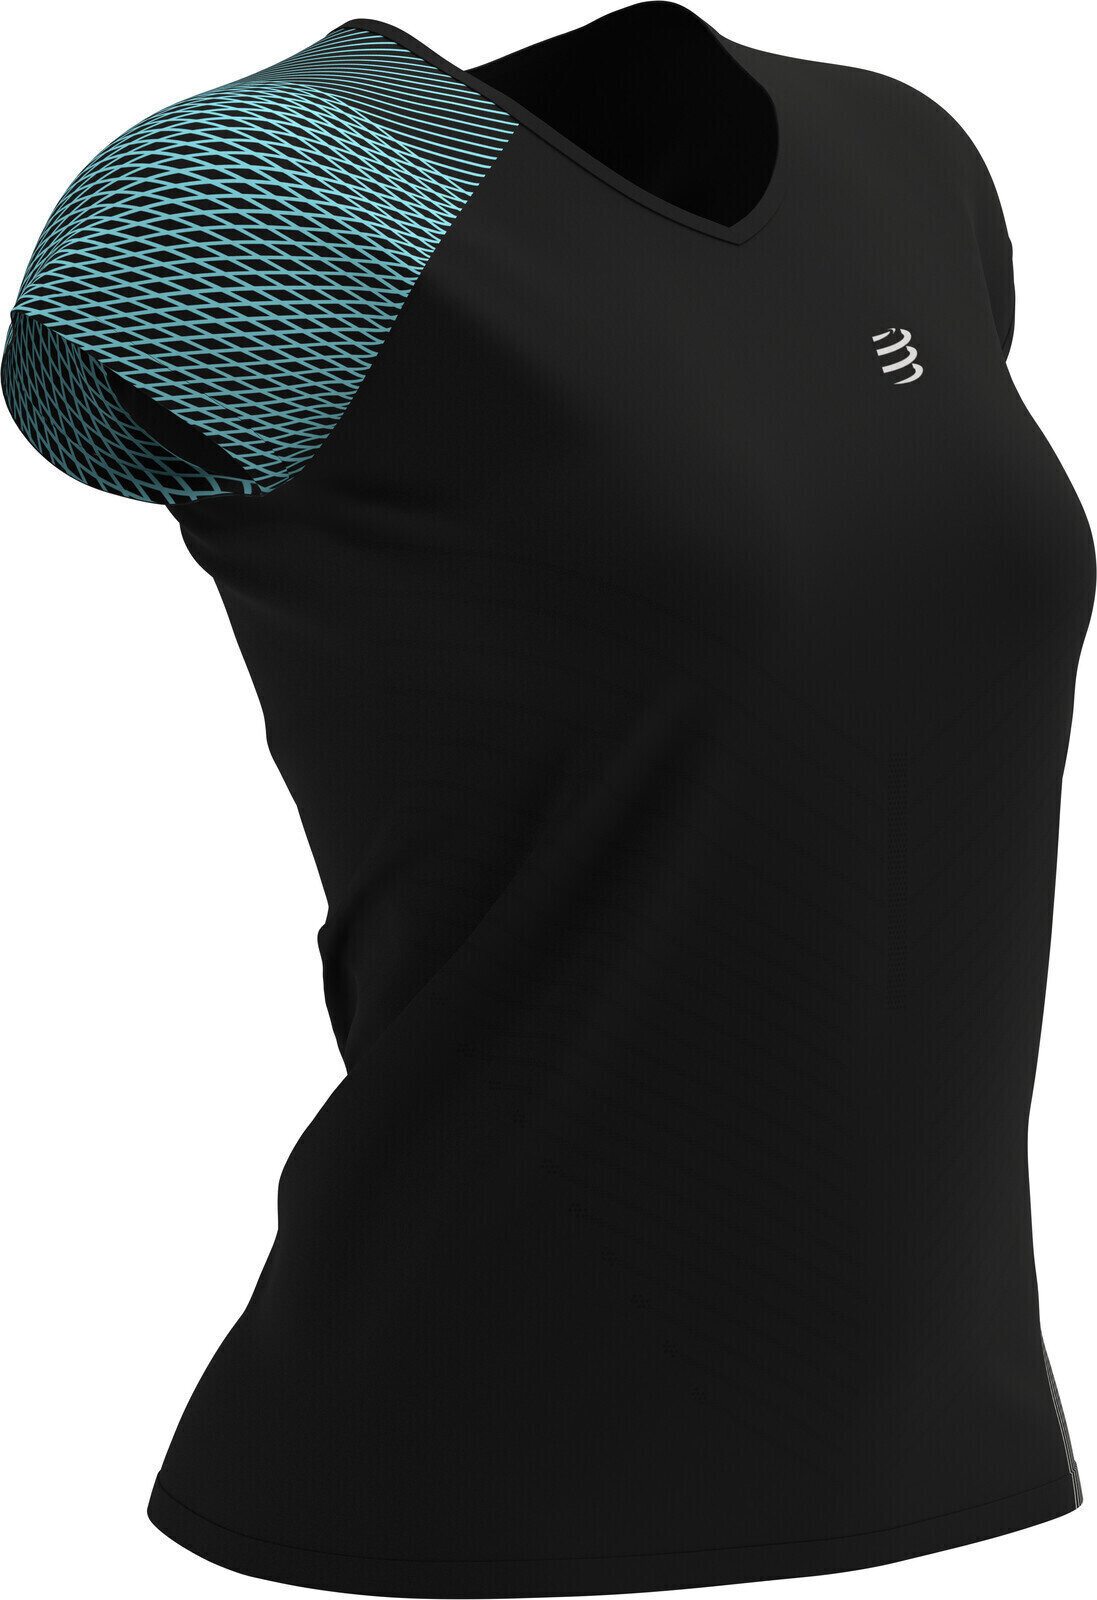 Bežecké tričko s krátkym rukávom
 Compressport Performance T-Shirt Black L Bežecké tričko s krátkym rukávom